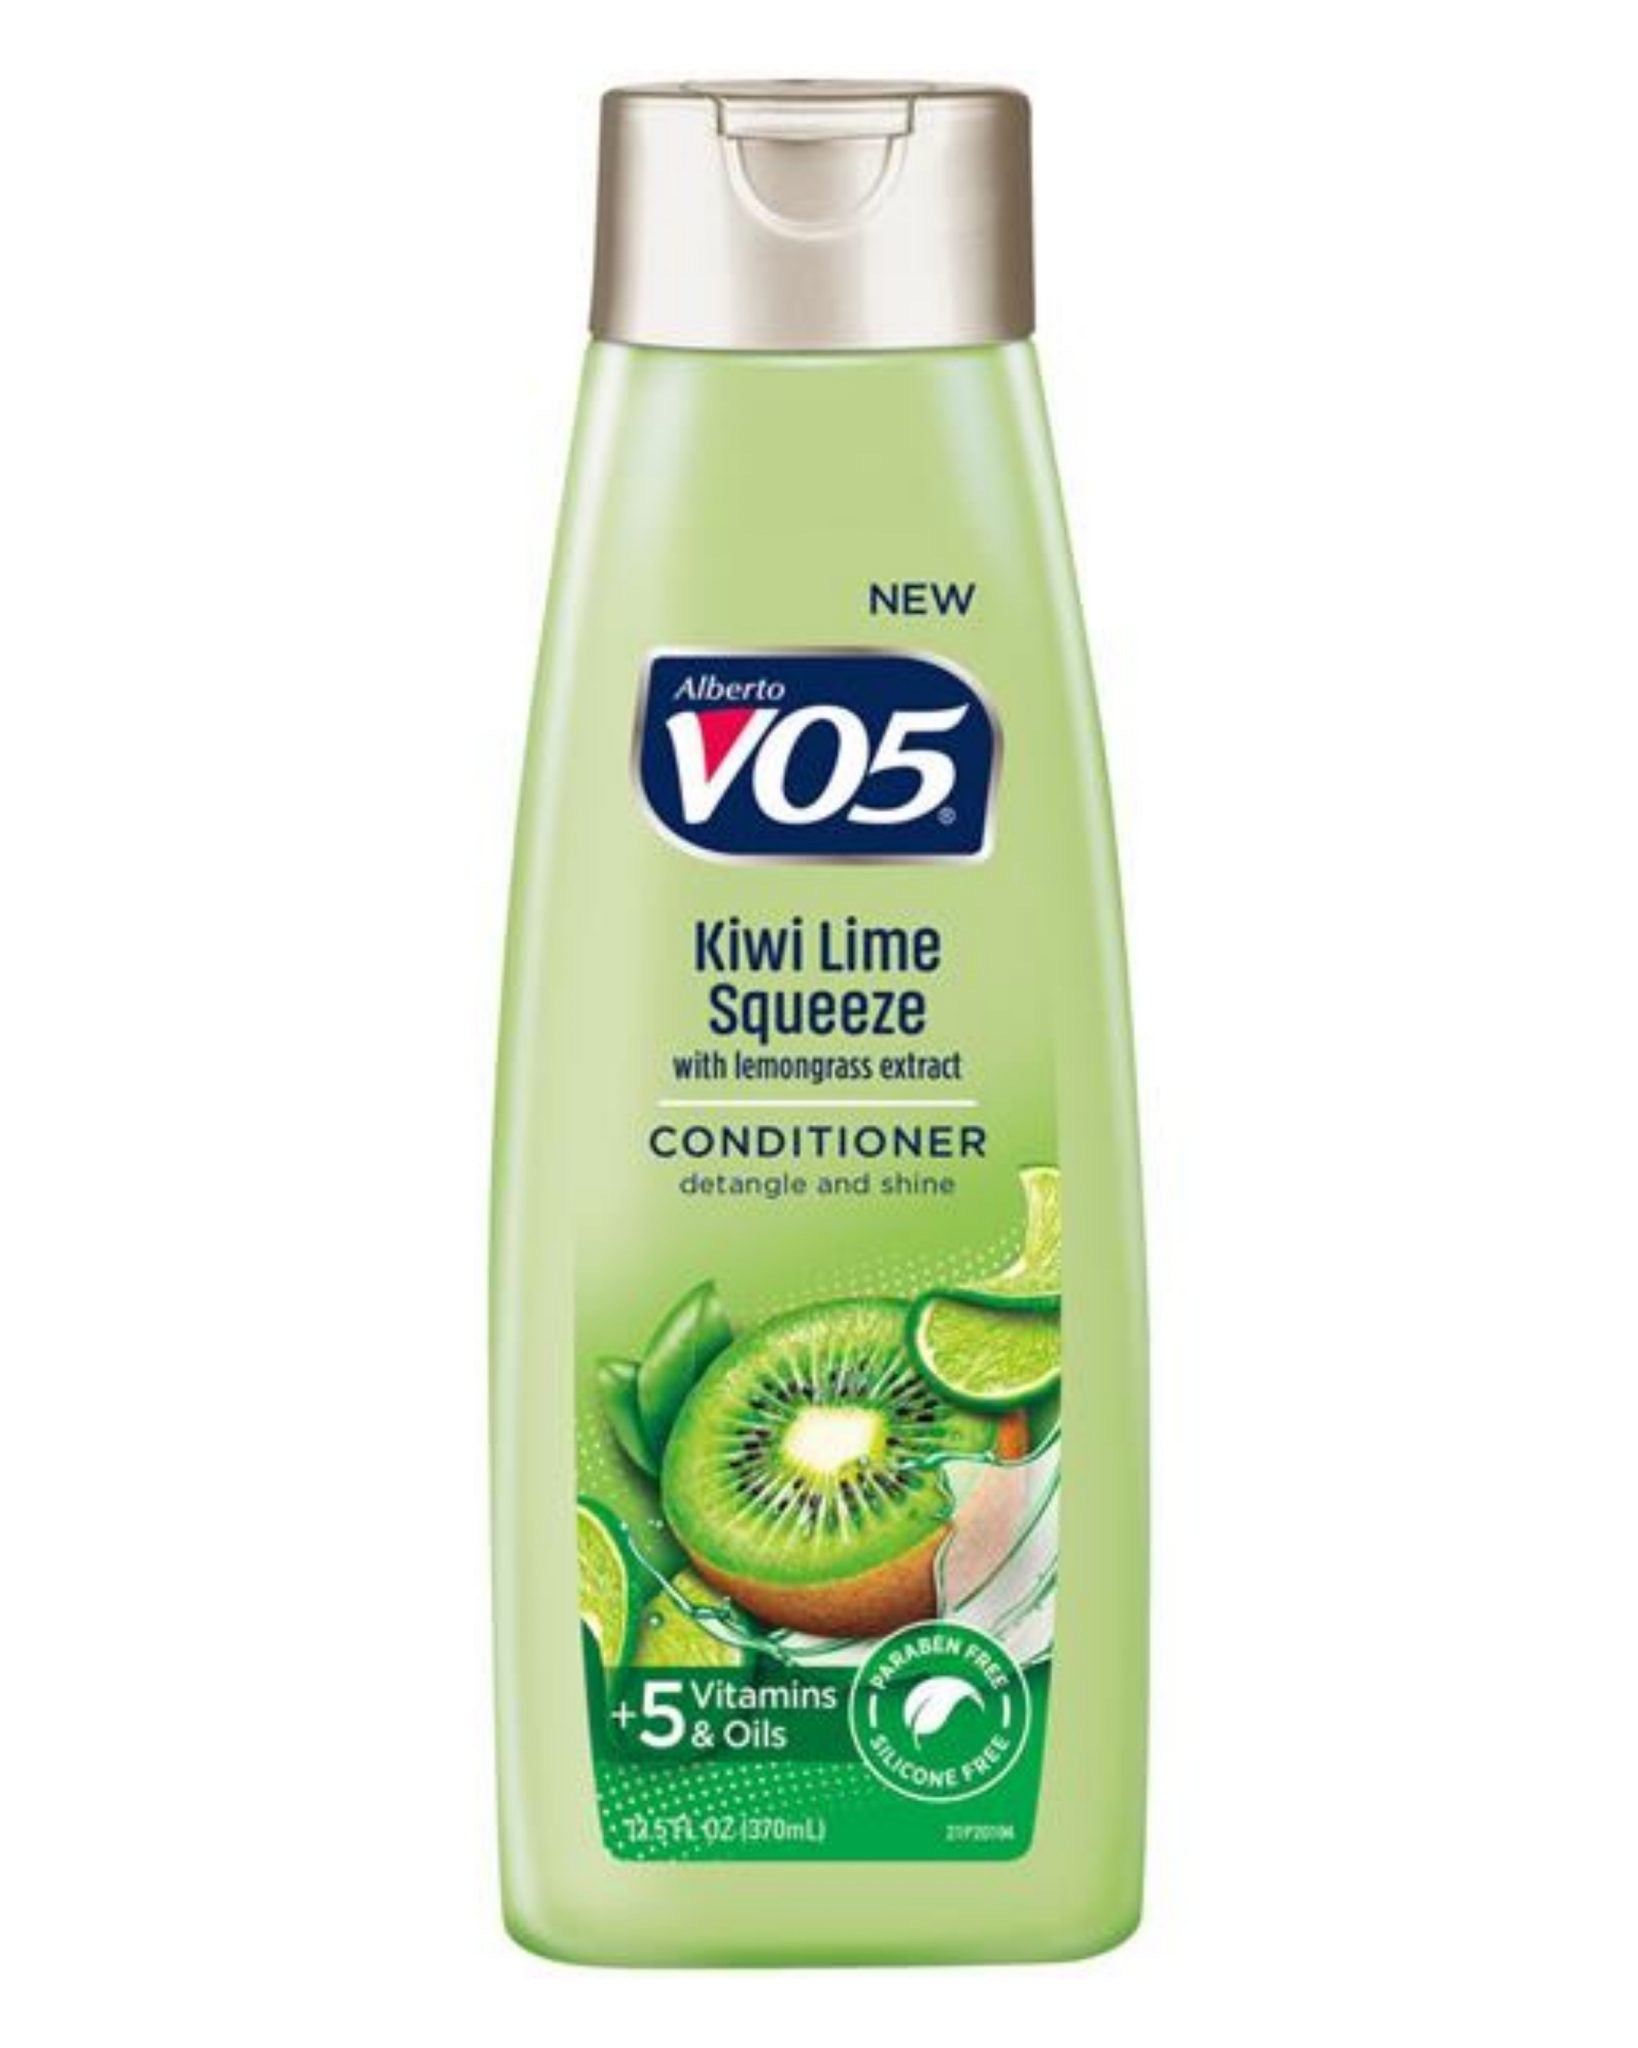 Vo5 shampoo & conditioner 12.5oz